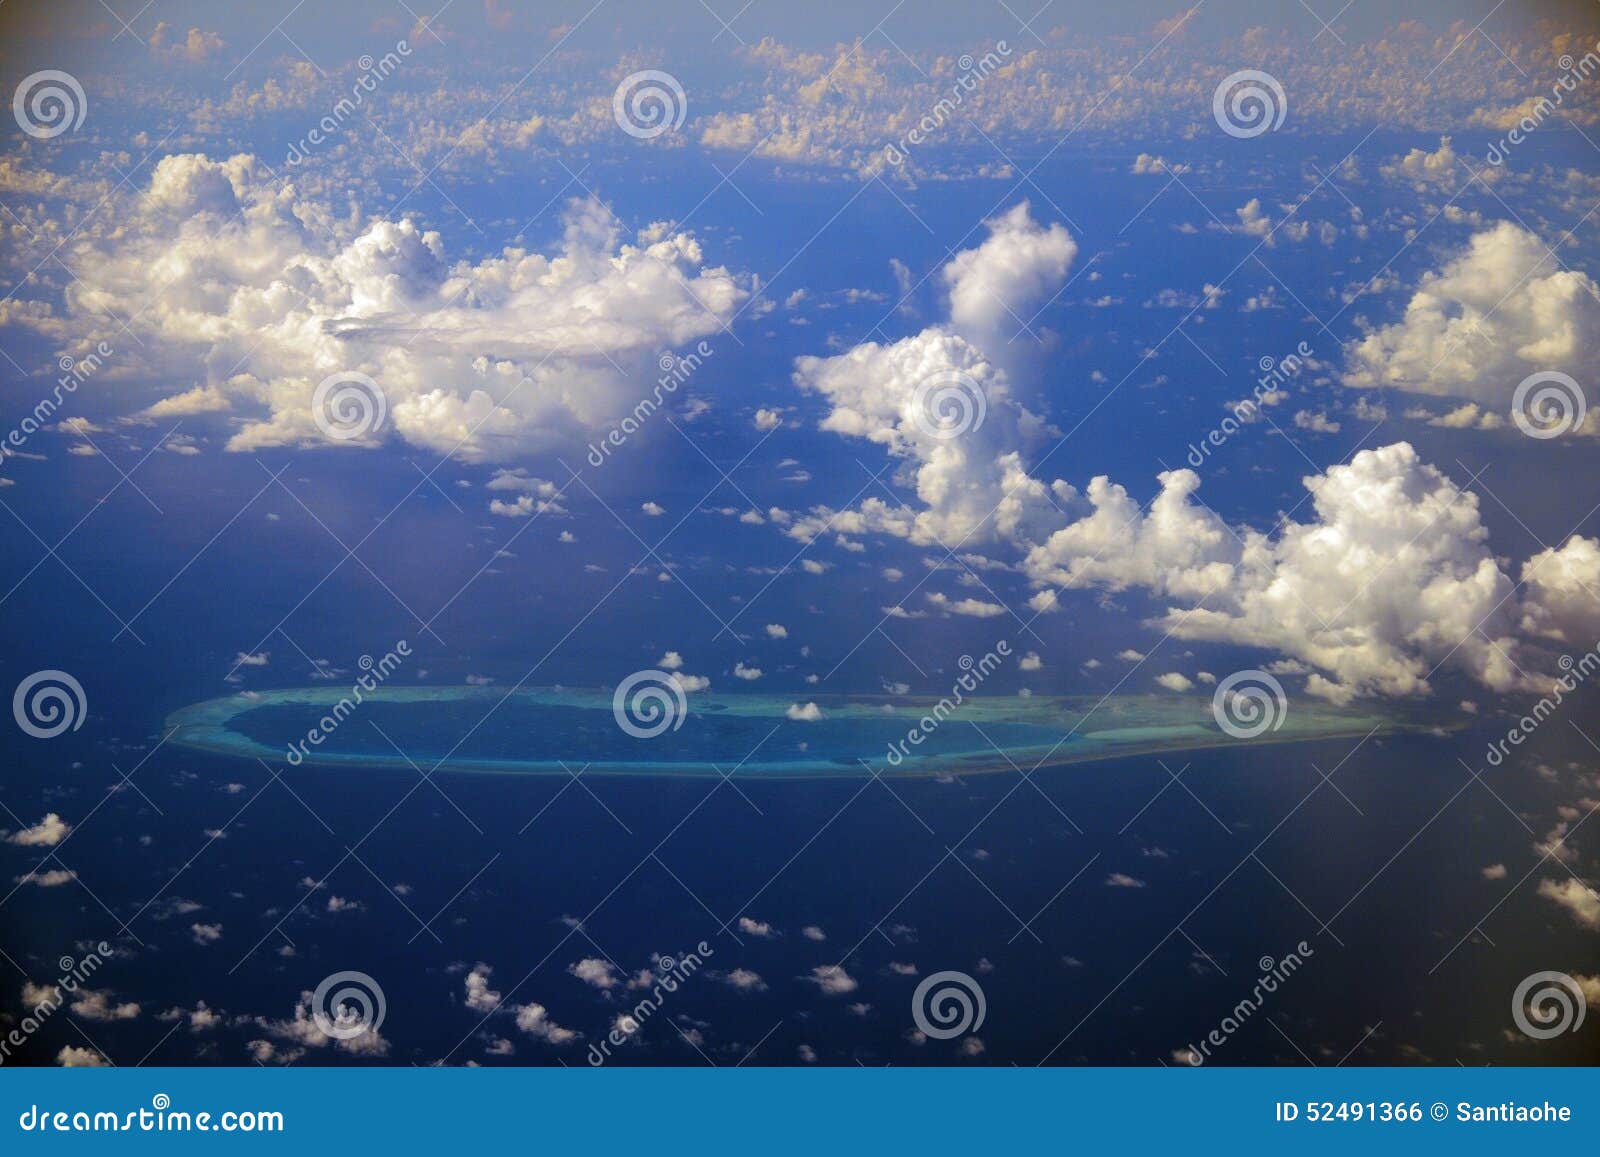 Paracel Islands stock photo. Image of isalnd, tourism - 52491366